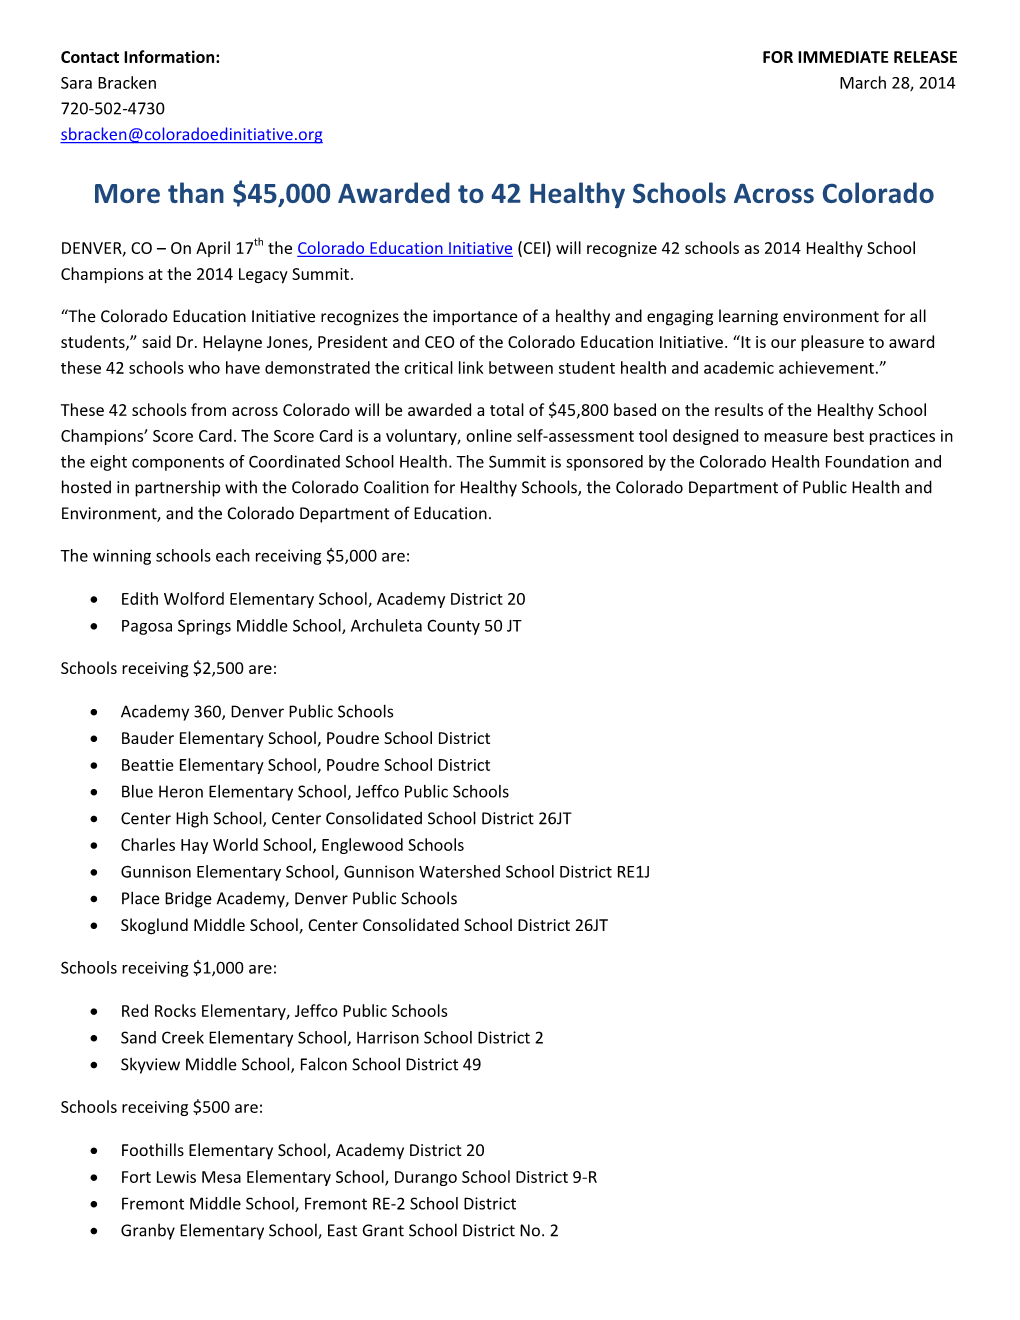 More Than $45,000 Awarded to 42 Healthy Schools Across Colorado